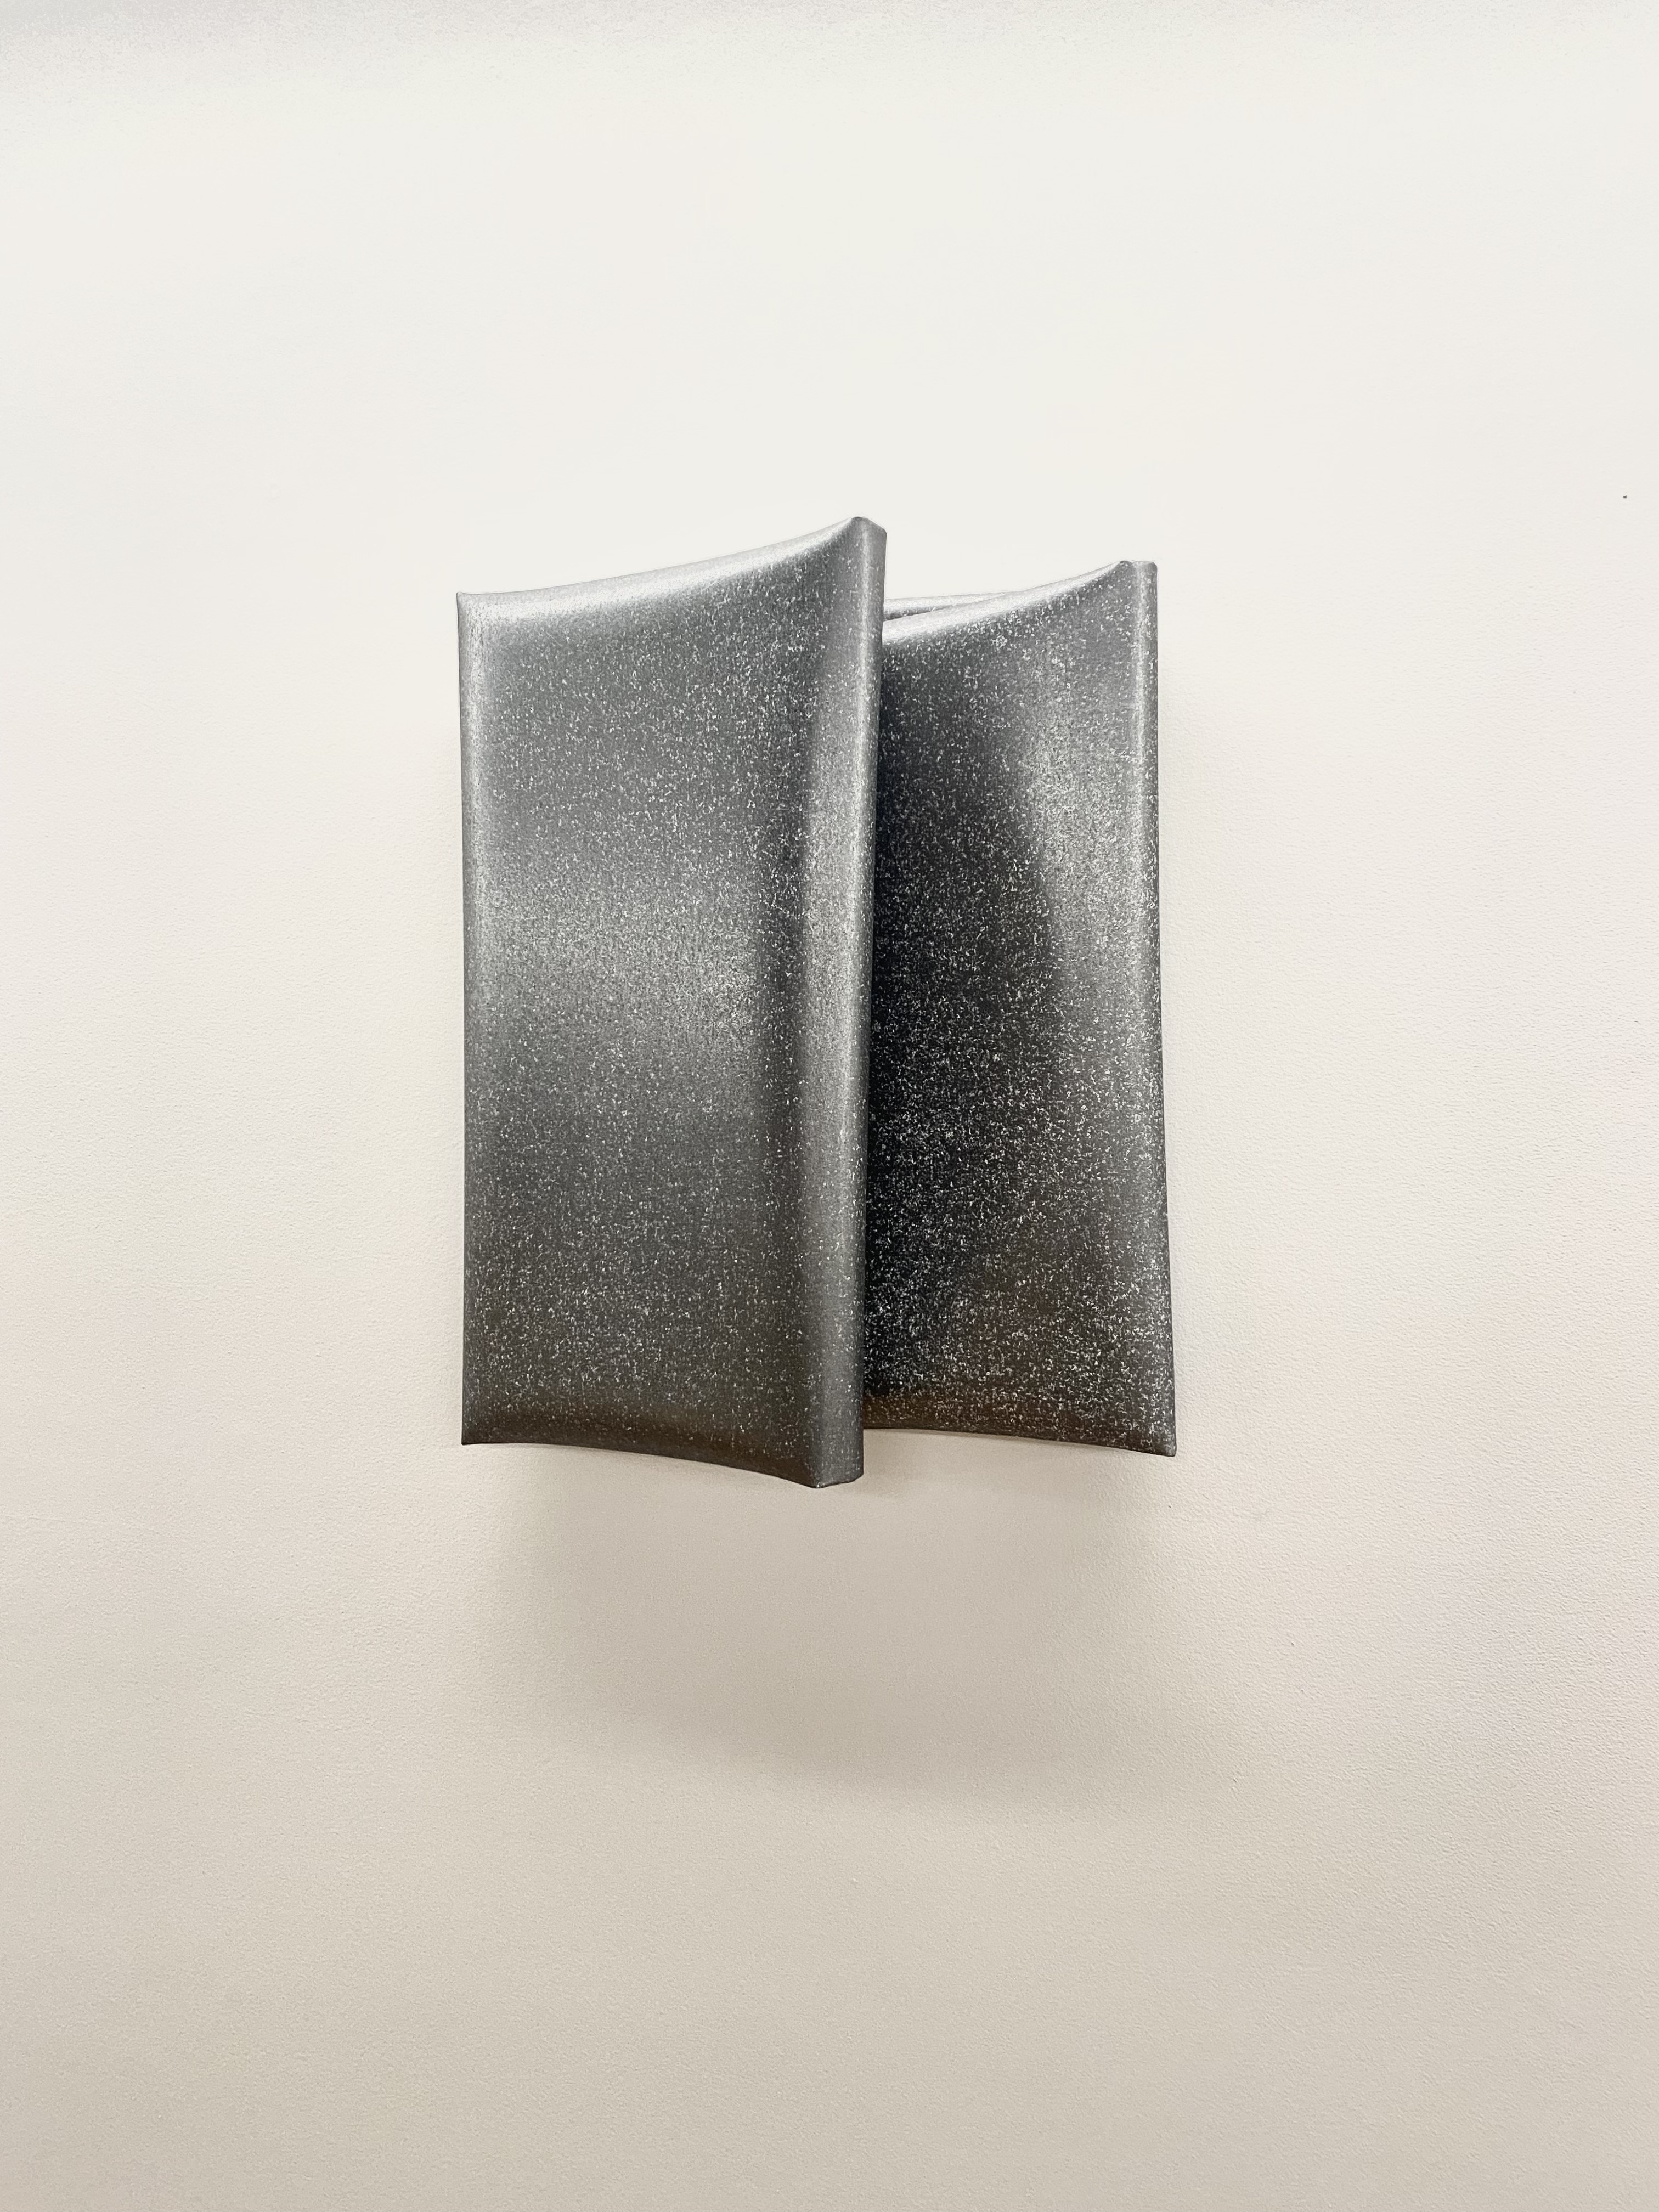 Diogo Pimentão, Touched (inclusion), paper and graphite, 48 x 40.5 x 14 cm, 2022.